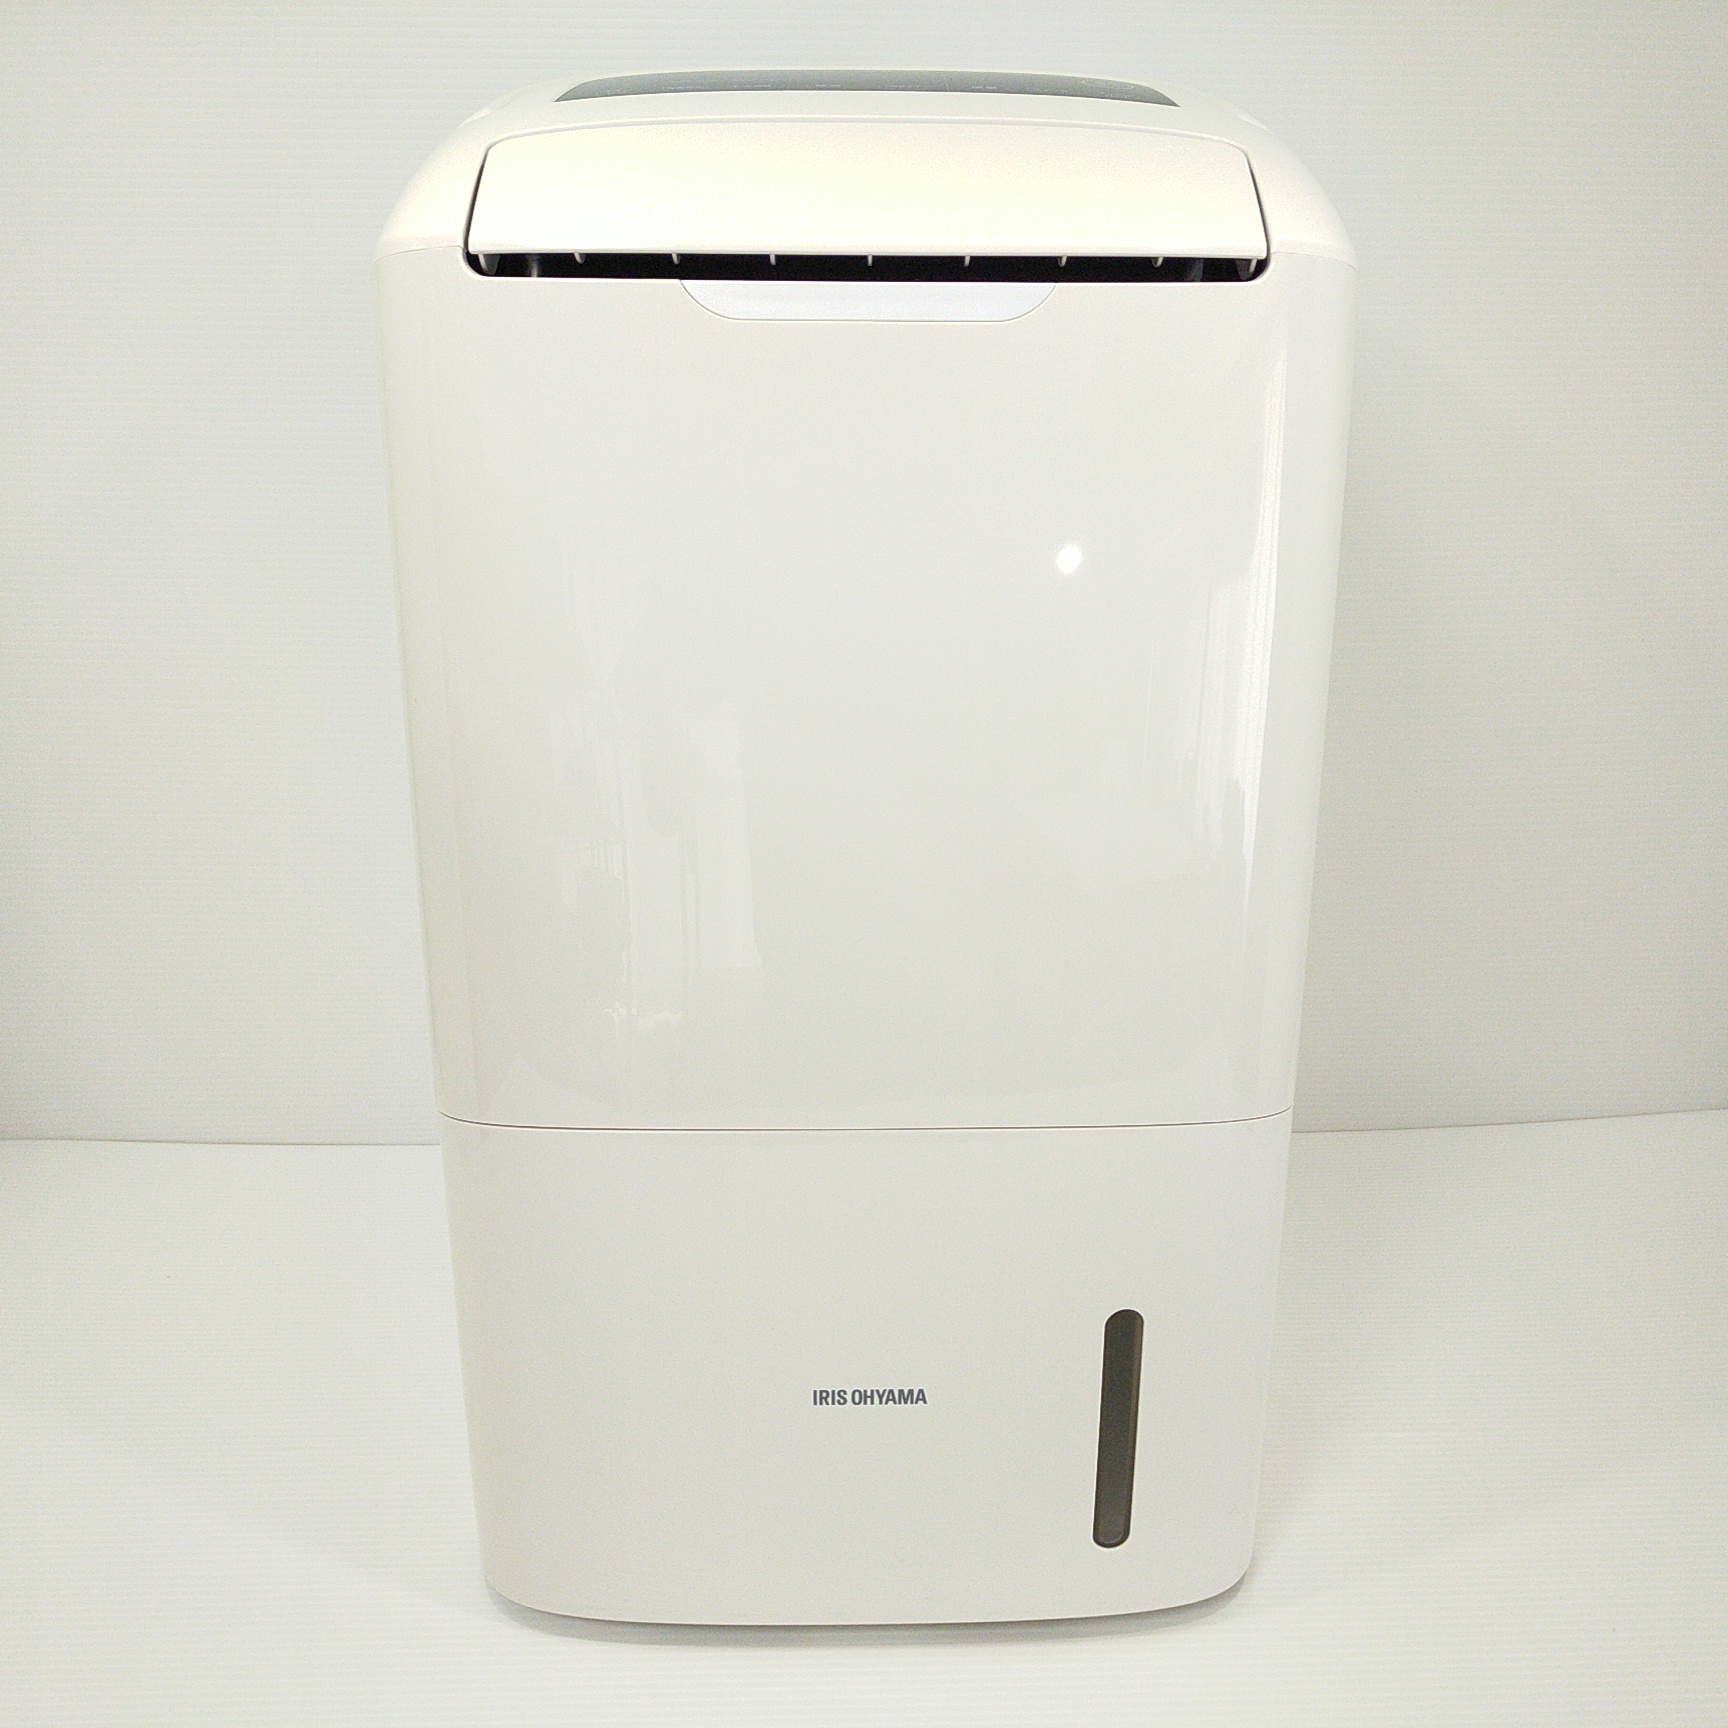  Iris o-yama compressor type air purifier clothes dry dehumidifier DCE-120